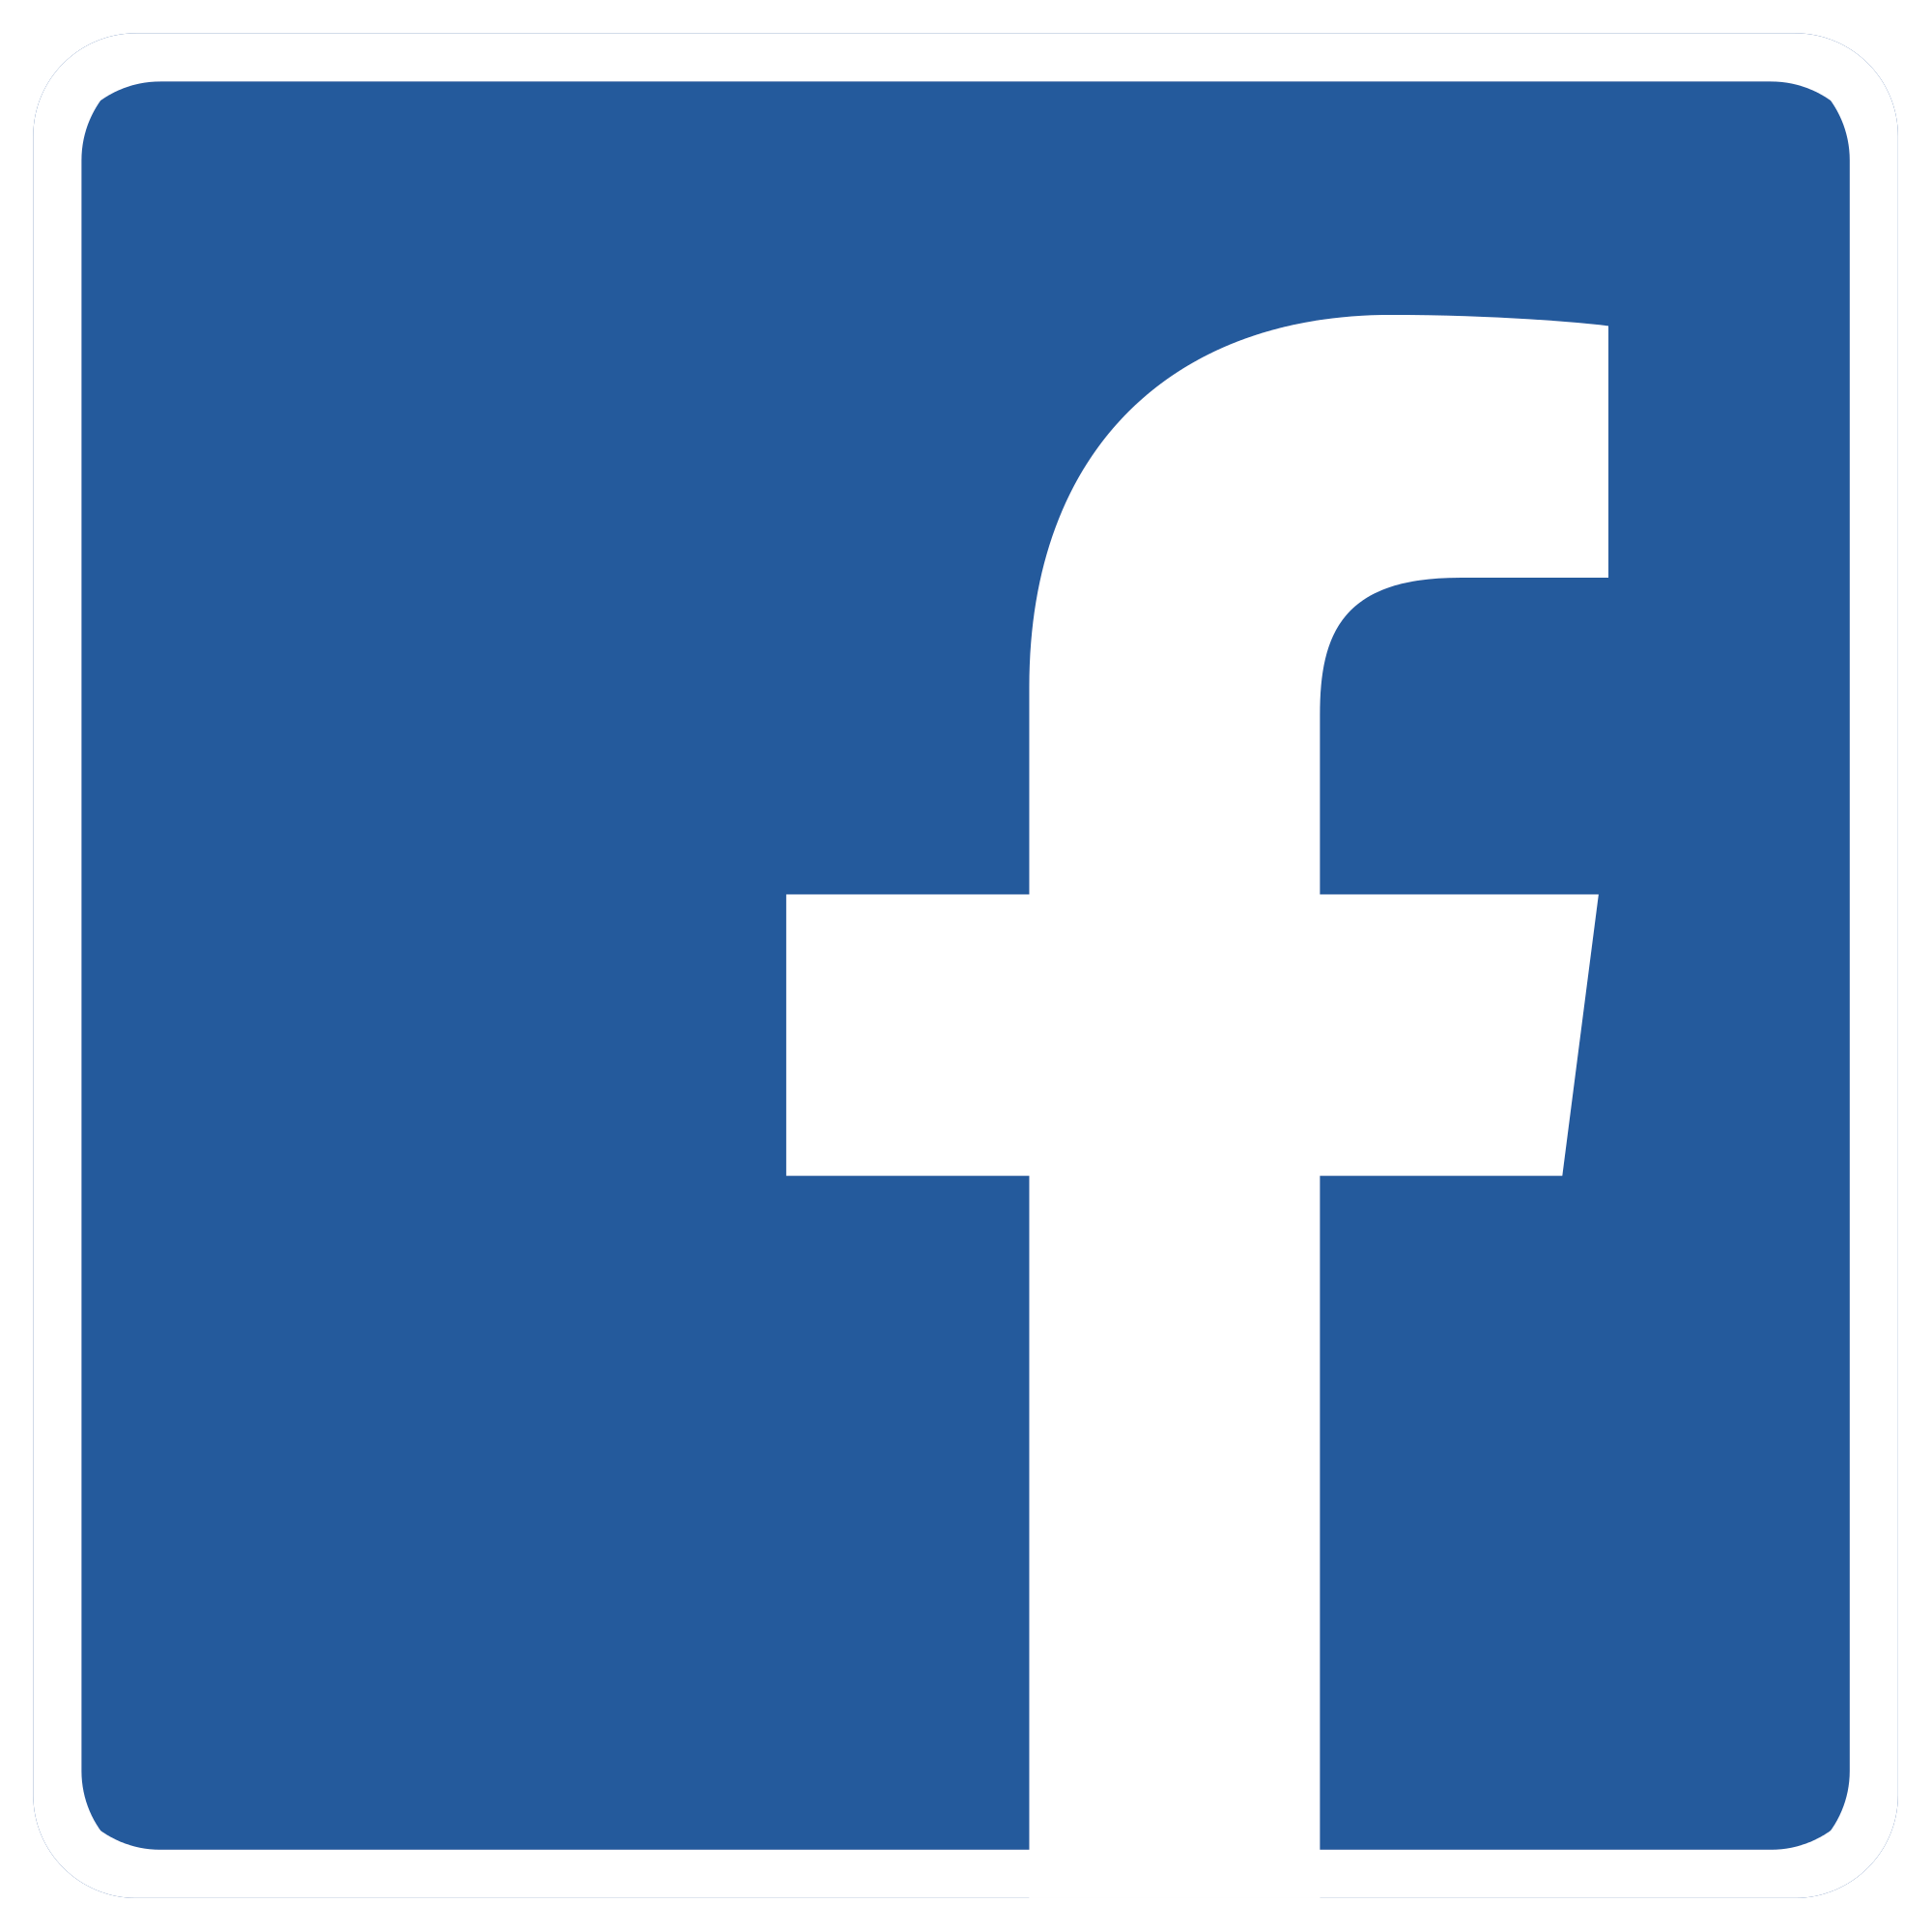 Download Facebook, Computer Facebook Inc. Icons Download HQ PNG HQ PNG Image | FreePNGImg